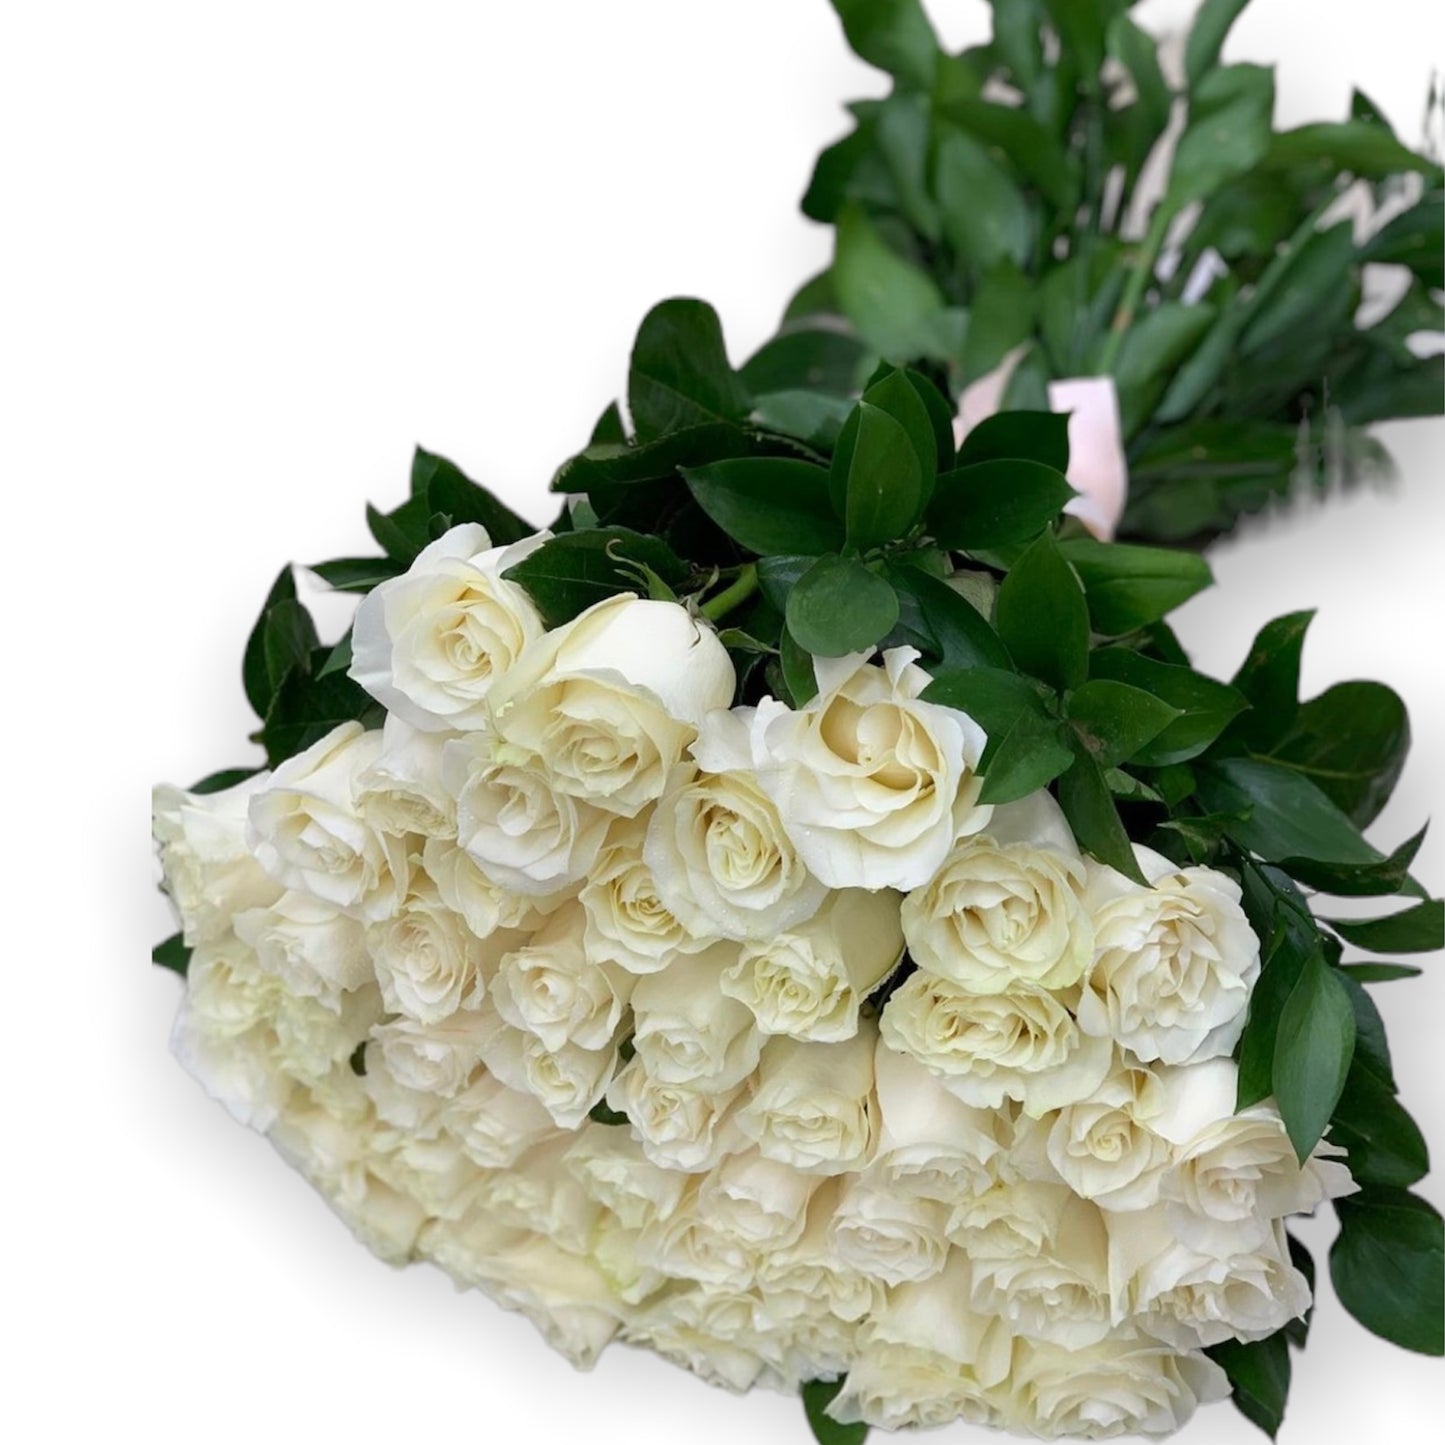 Buchet simplu cu trandafiri naturali albi